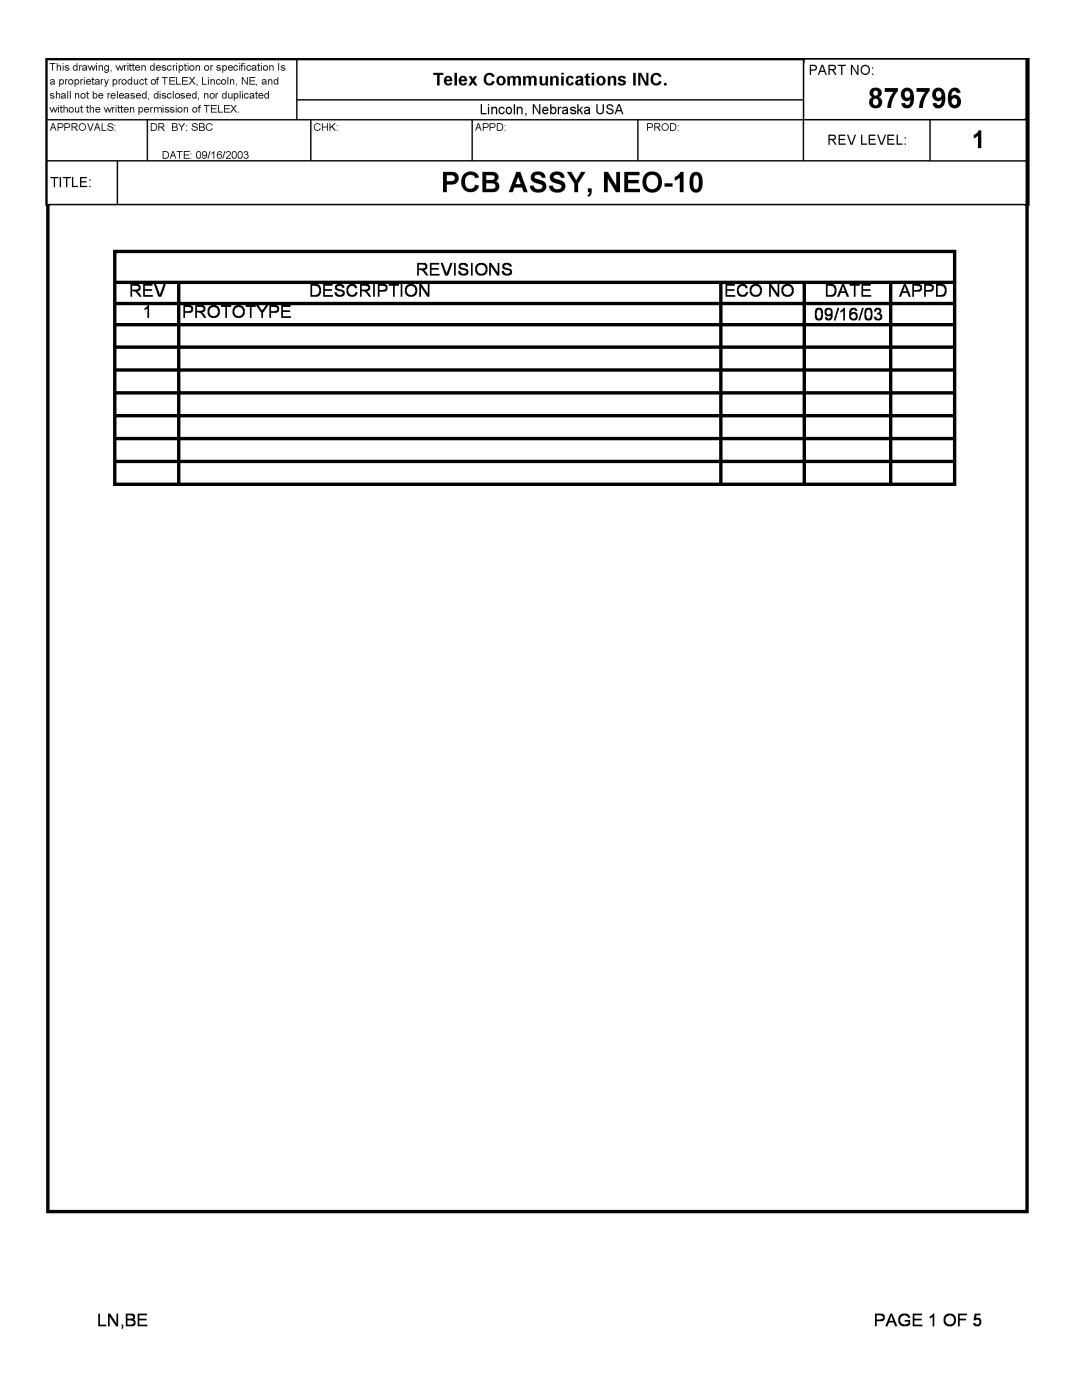 Telex technical manual 879796, PCB ASSY, NEO-10, Telex Communications INC 